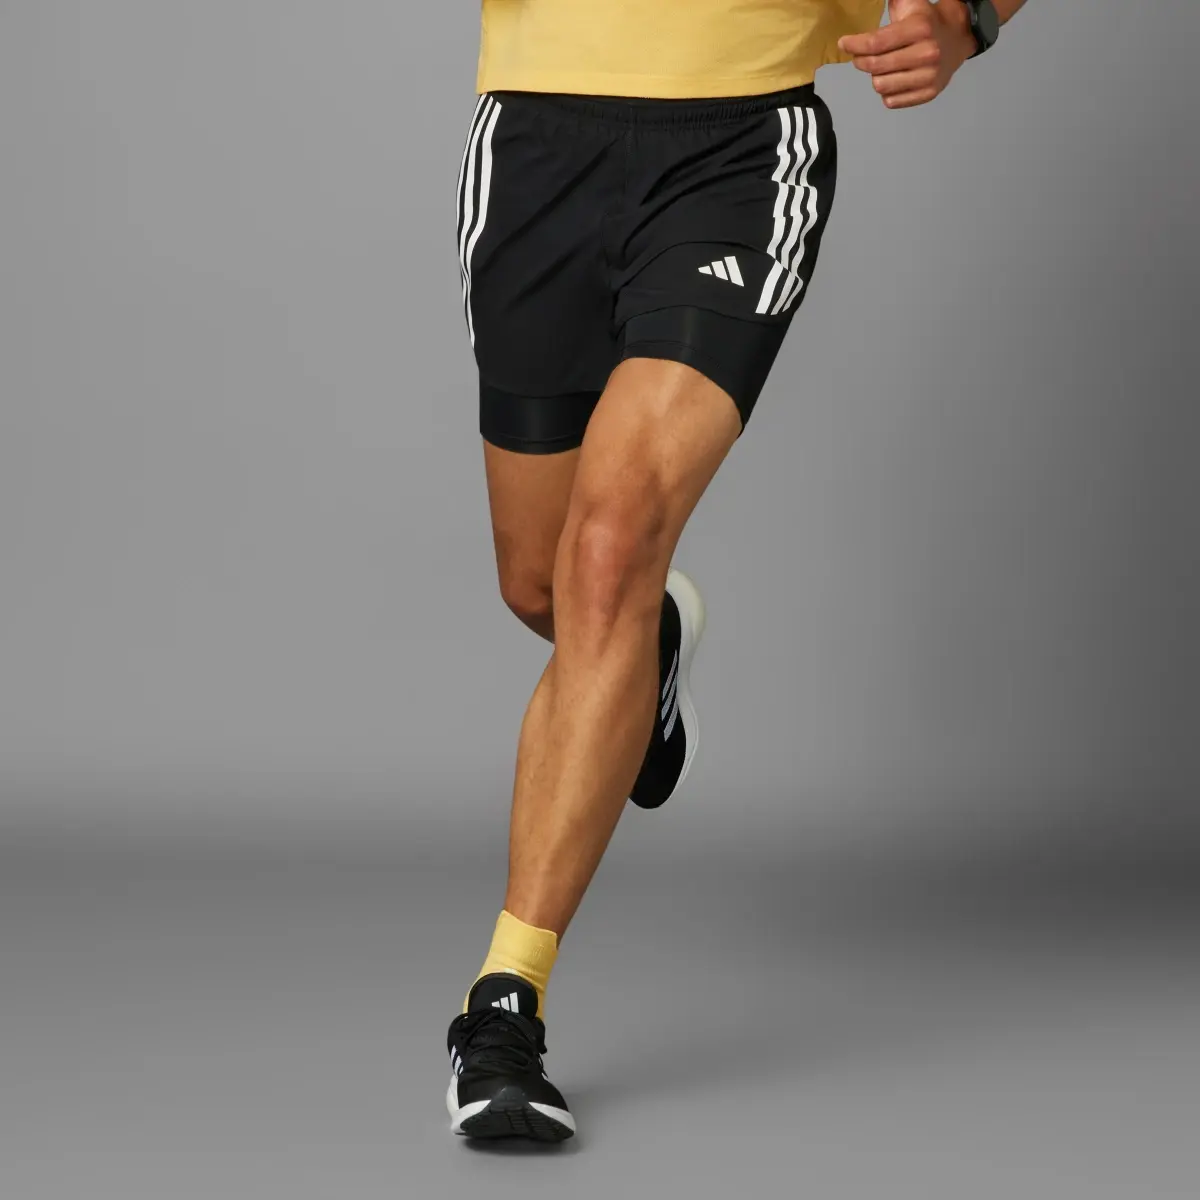 Adidas Own the Run 3-Stripes 2-in-1 Shorts. 1